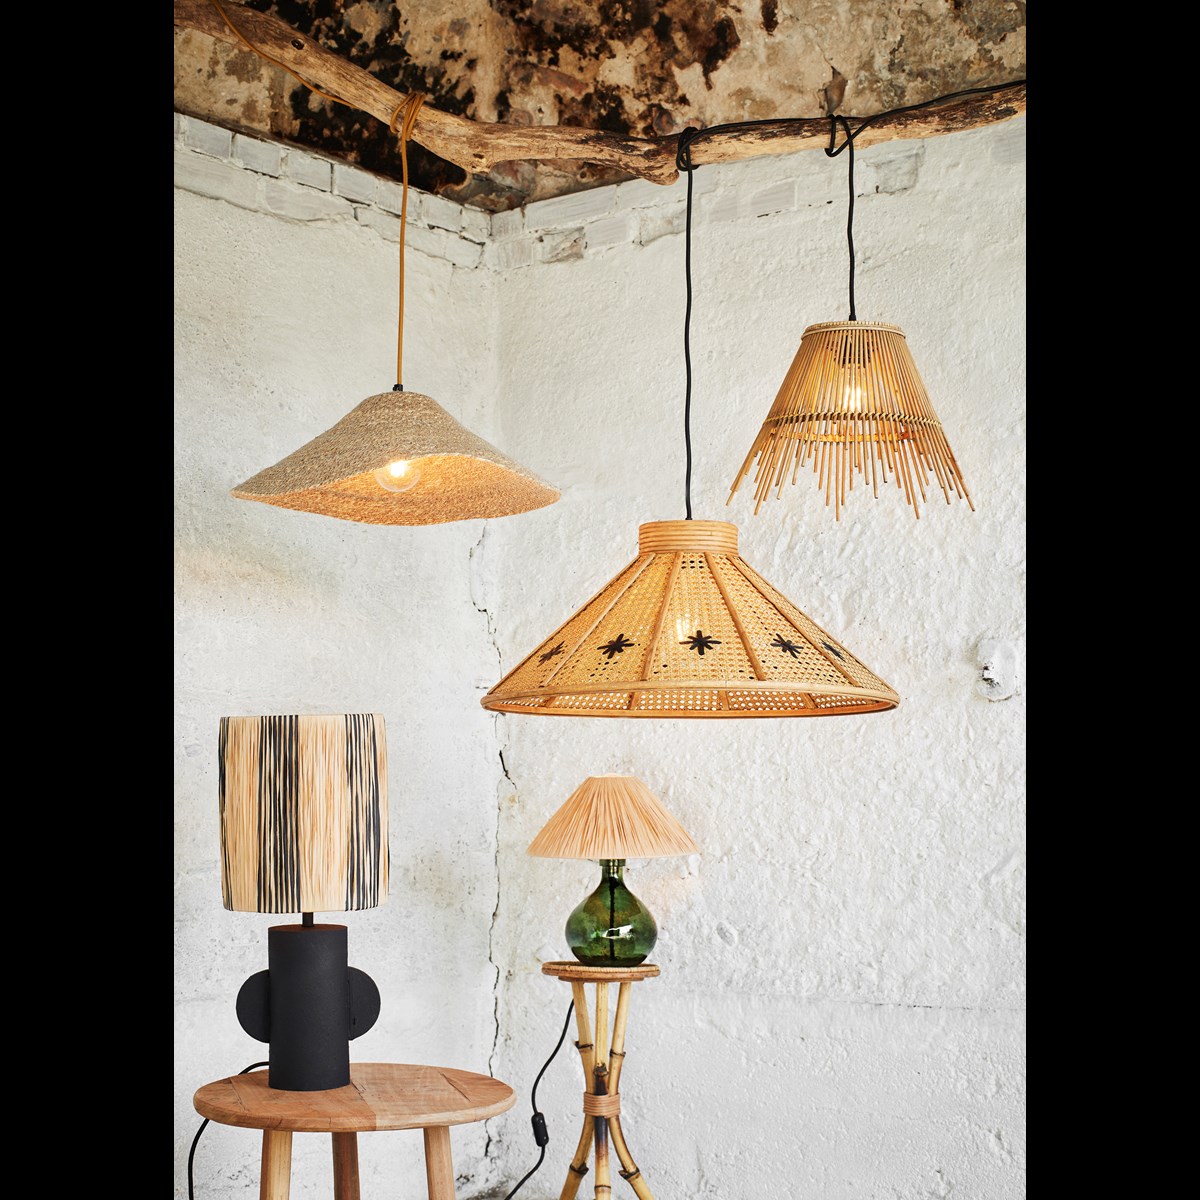 Rattan ceiling lamps